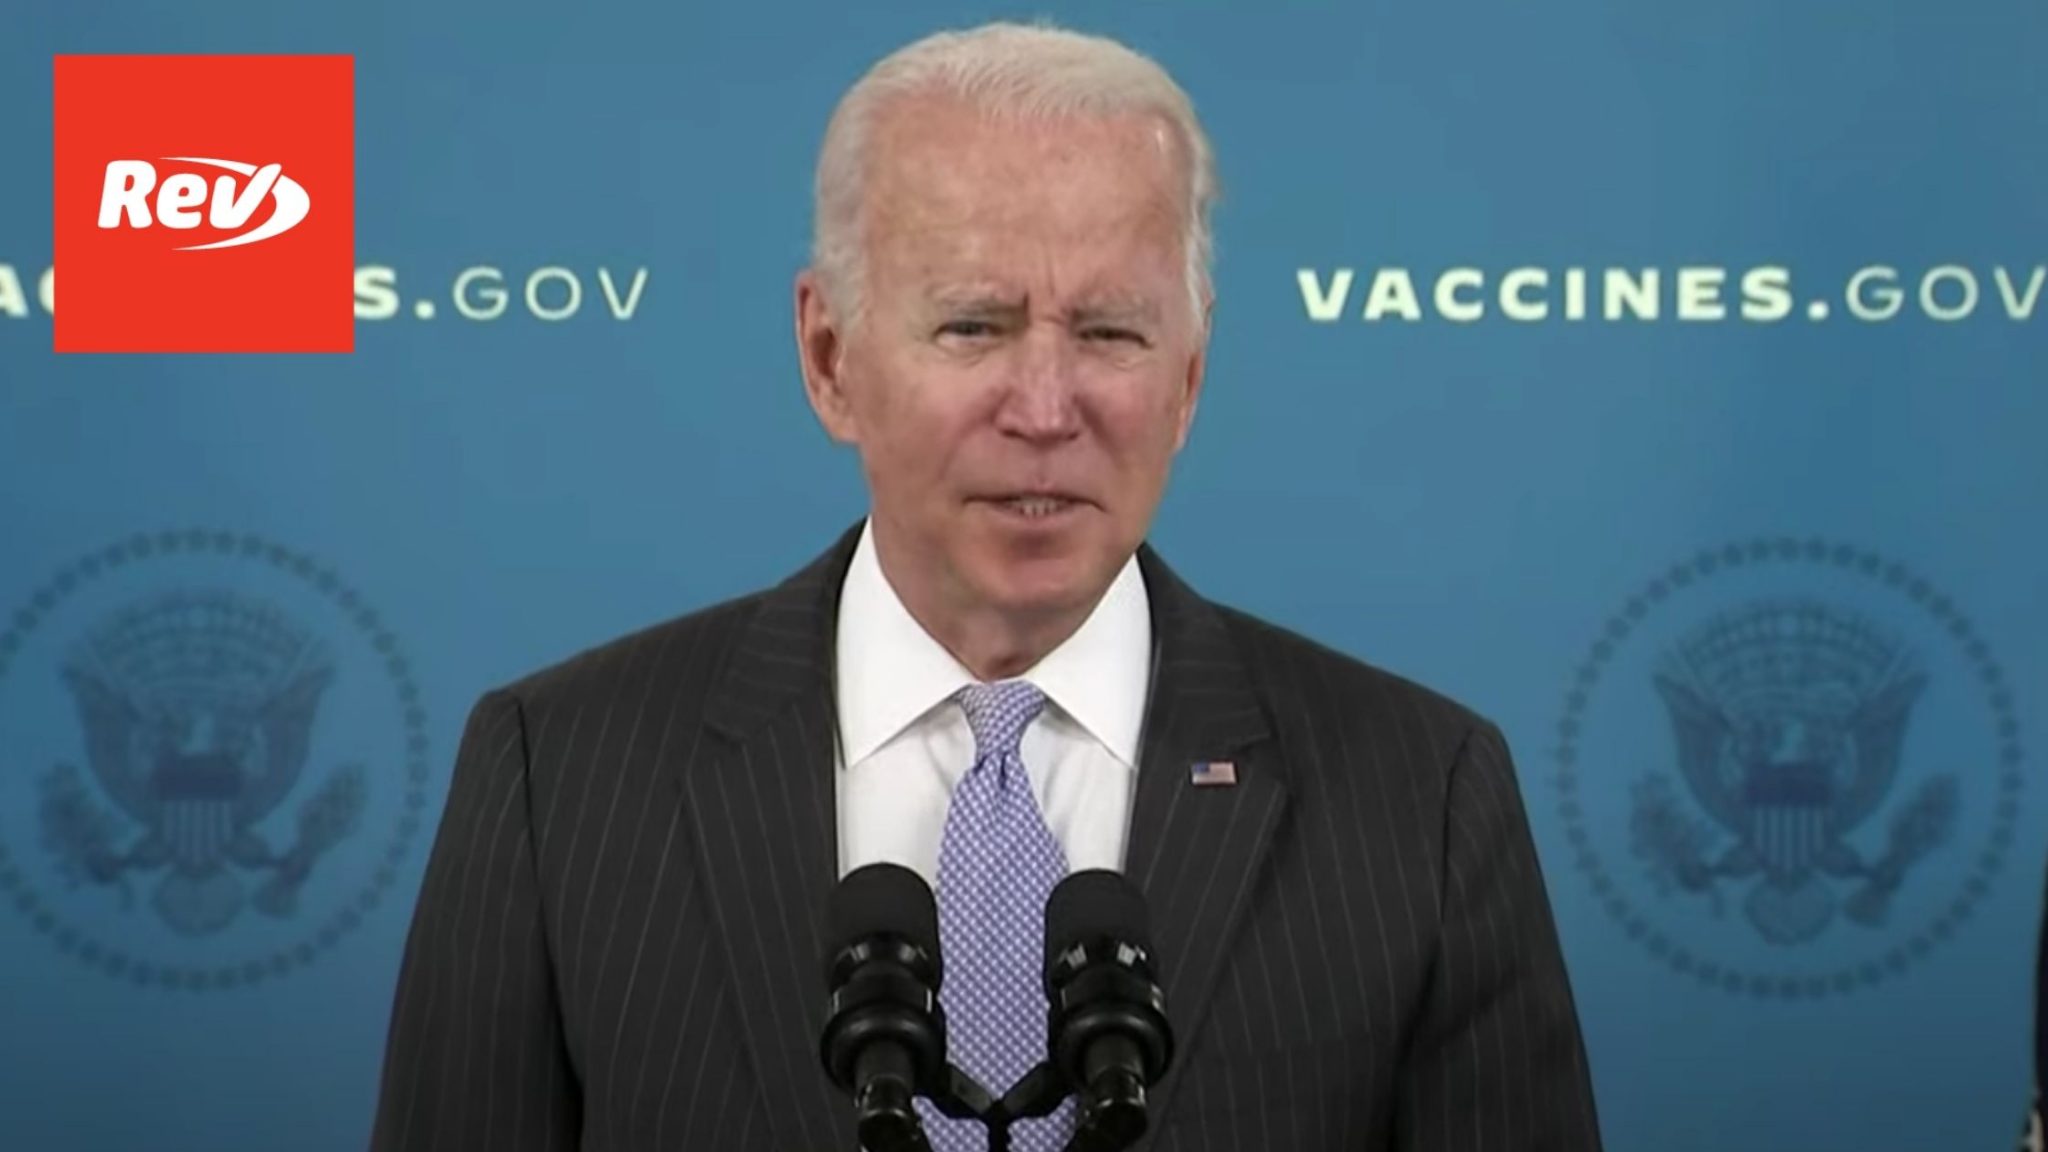 Joe Biden Speech on COVID-19 Vaccines for Children 5 and Older Transcript